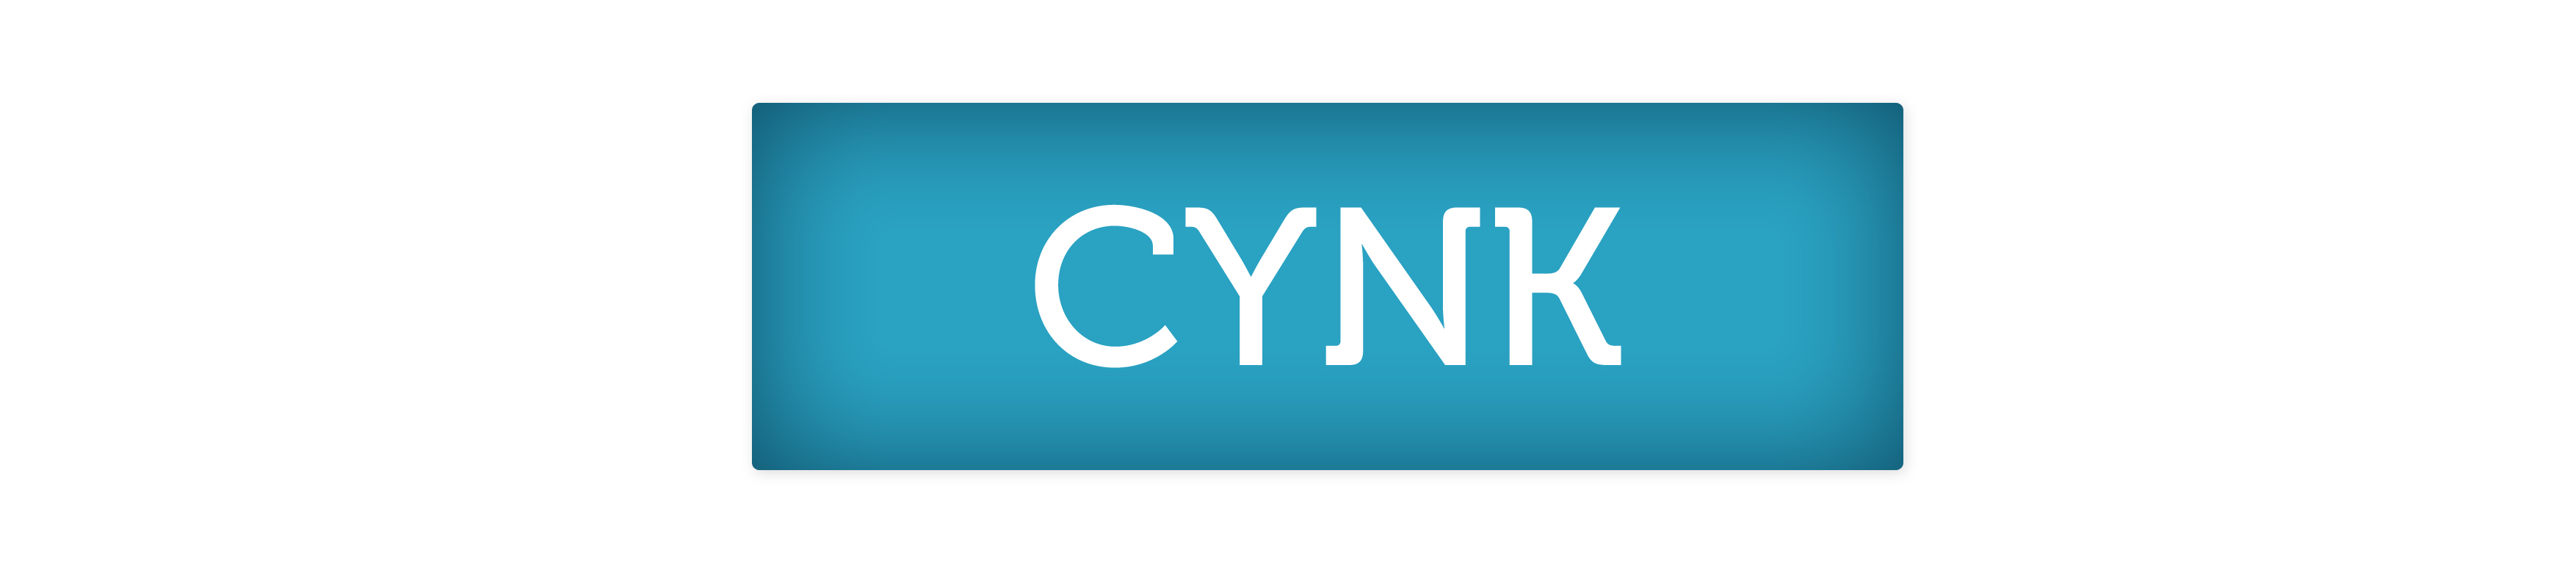 CYNK.jpg